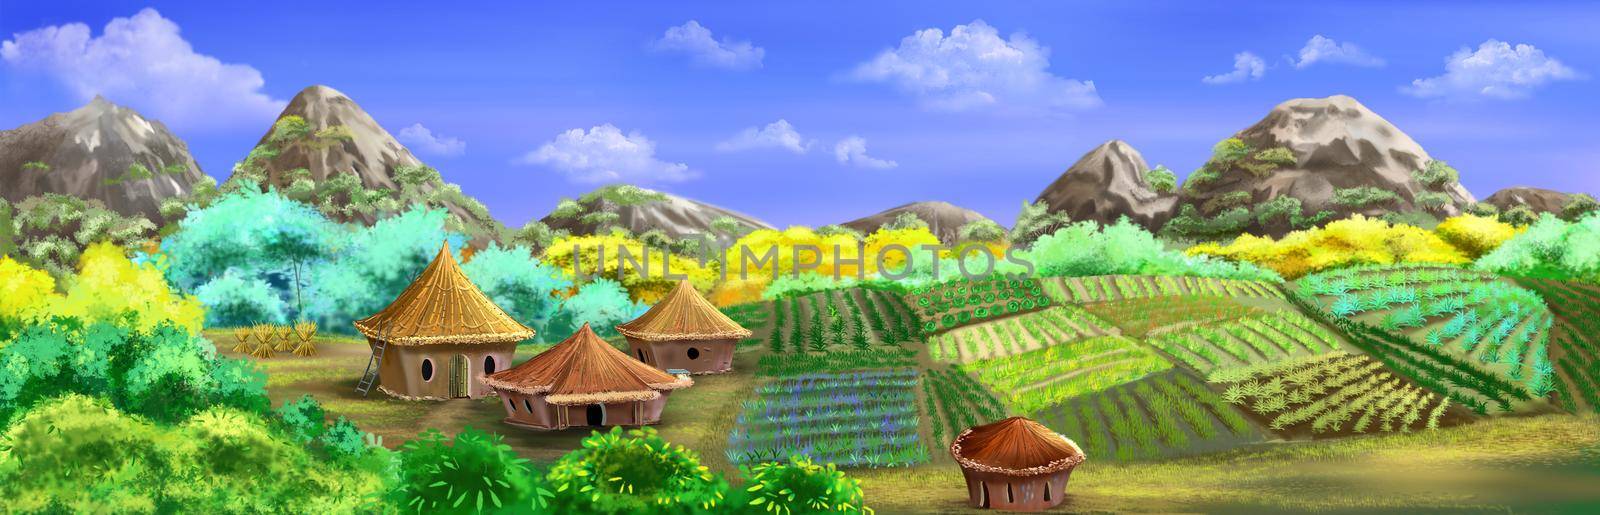 Fairy tale hobbit village by Multipedia